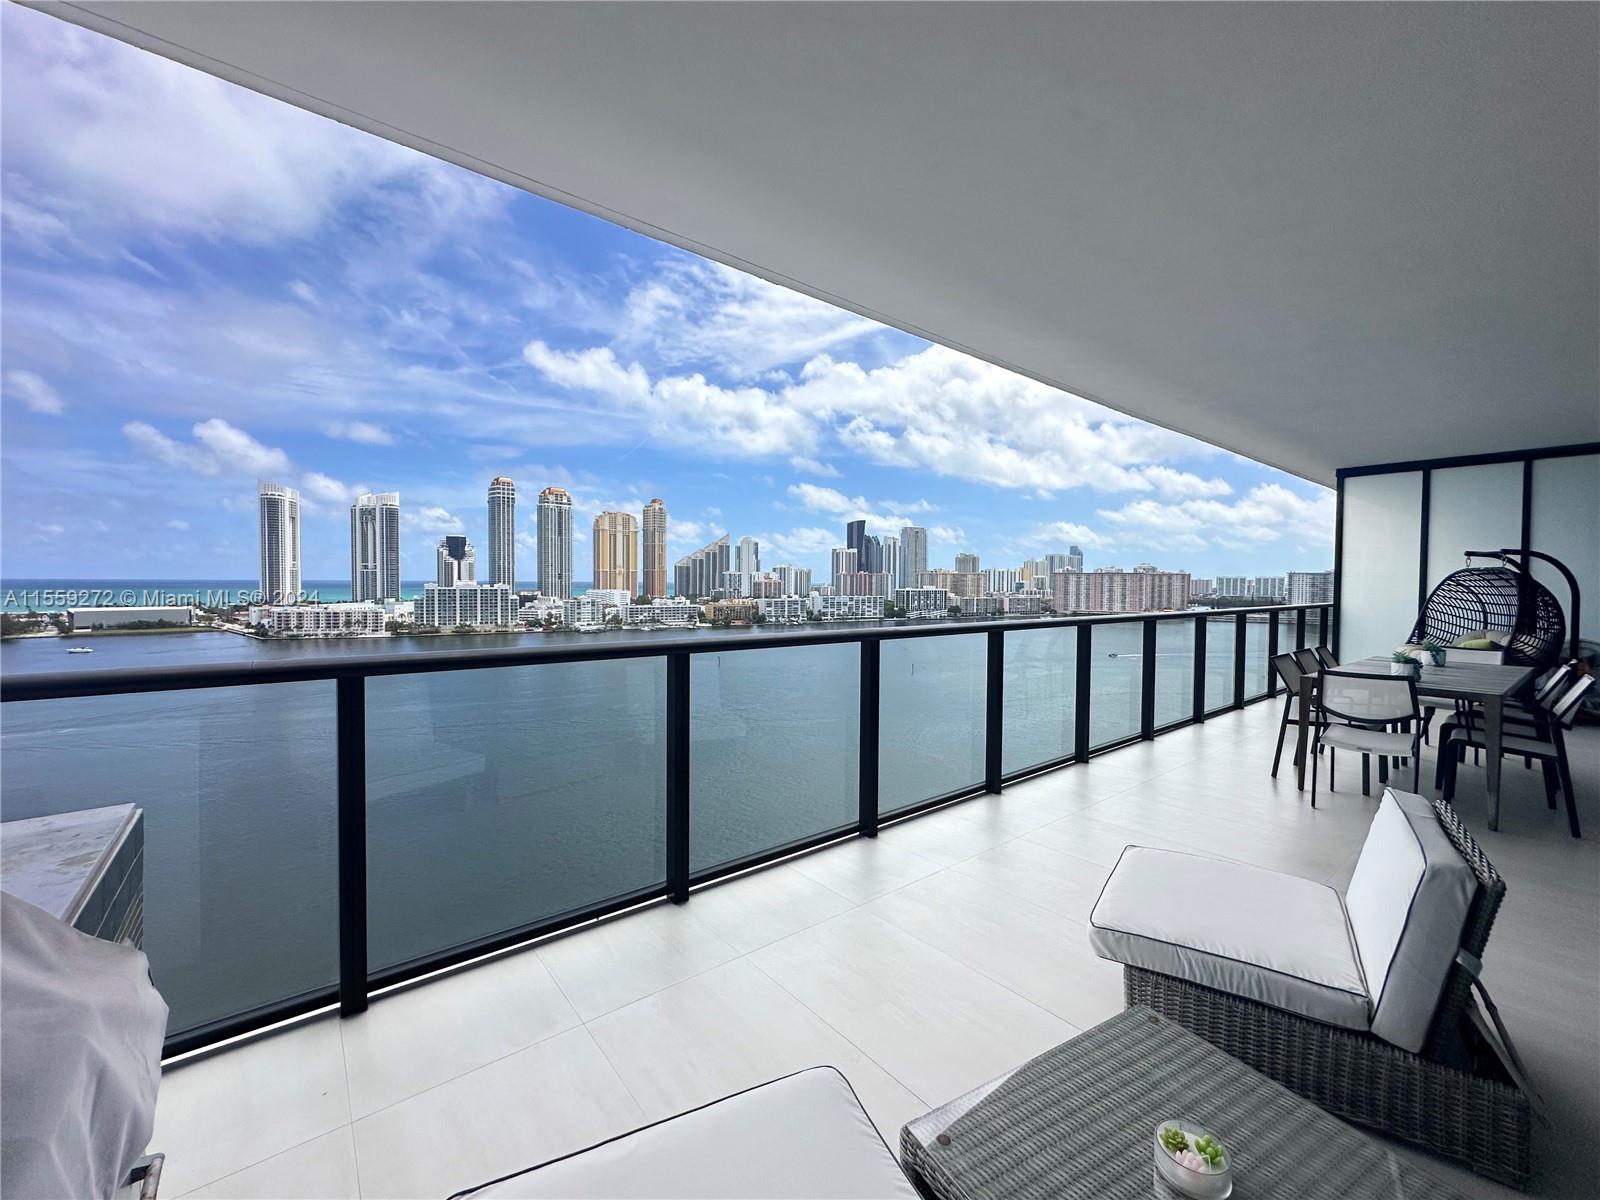 Property for Sale at 5000 Island Estates Dr 1407, Aventura, Miami-Dade County, Florida - Bedrooms: 3 
Bathrooms: 5  - $3,995,000